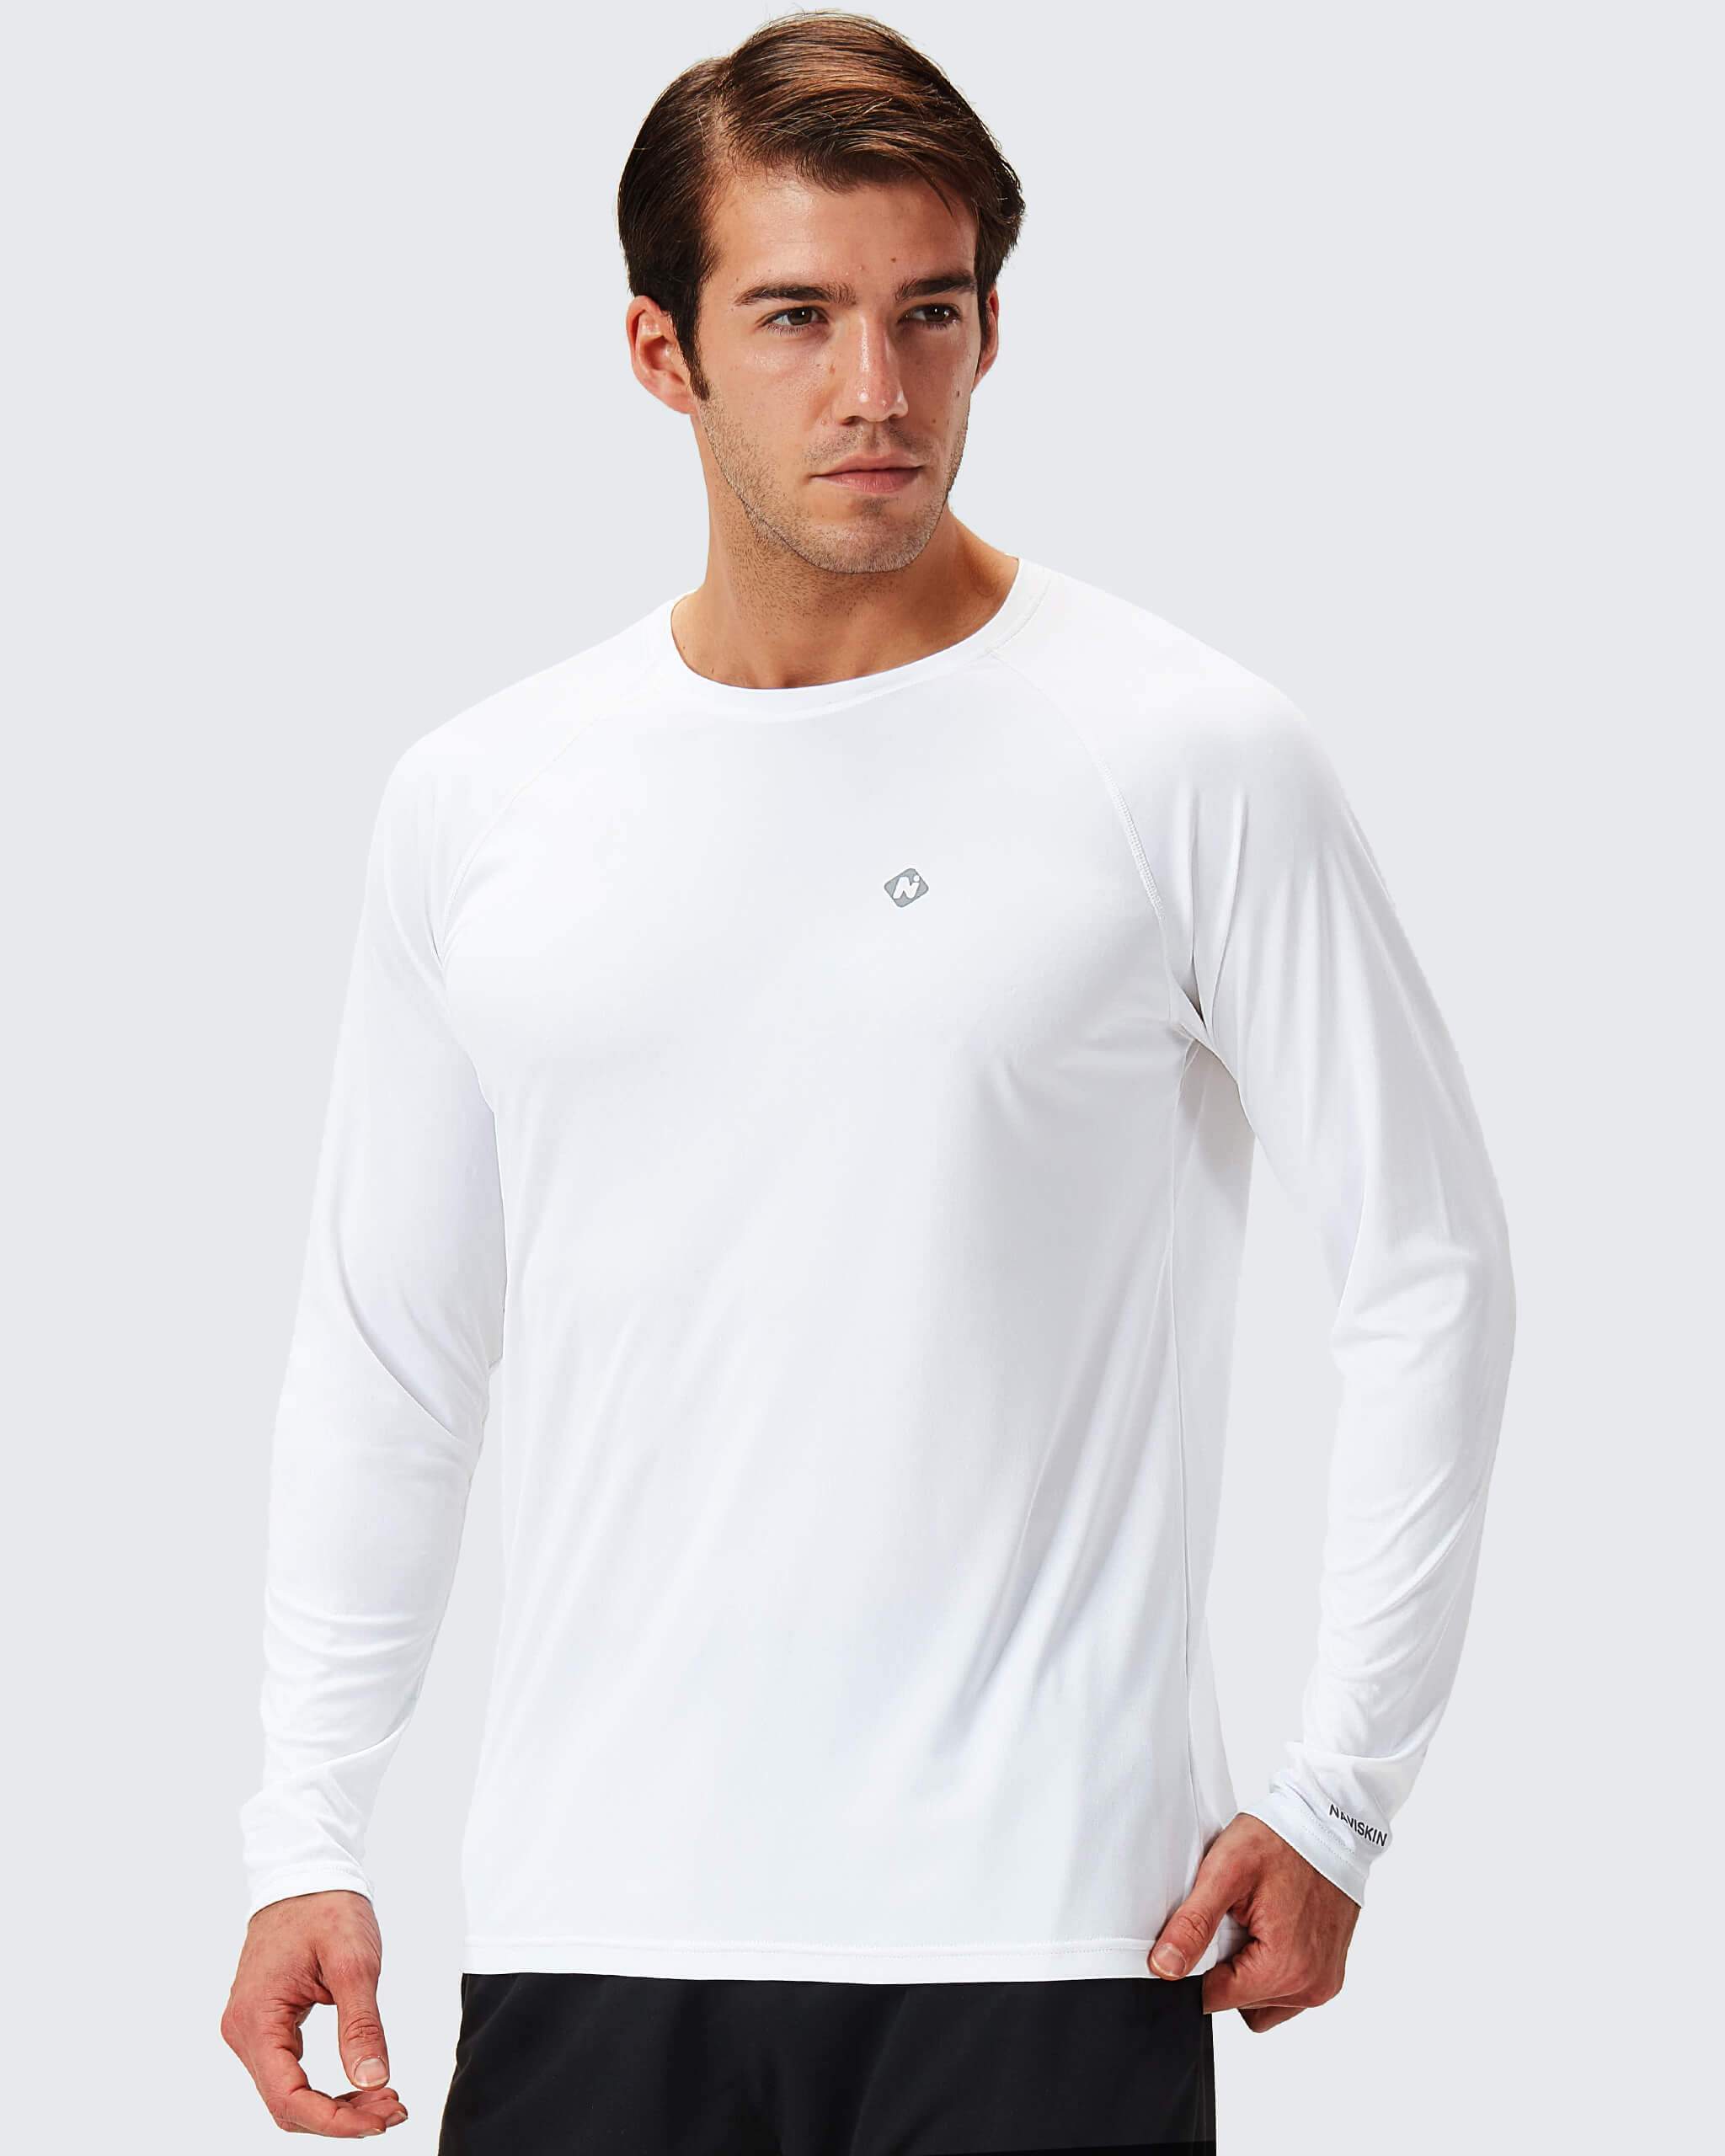 NAVISKIN Men's Quick Dry UPF 50+ Sun Protection Long Sleeve Fishing Tshirt Lightweight Hiking Shirts Rash Guard Swim Shirt, White / XX-Large